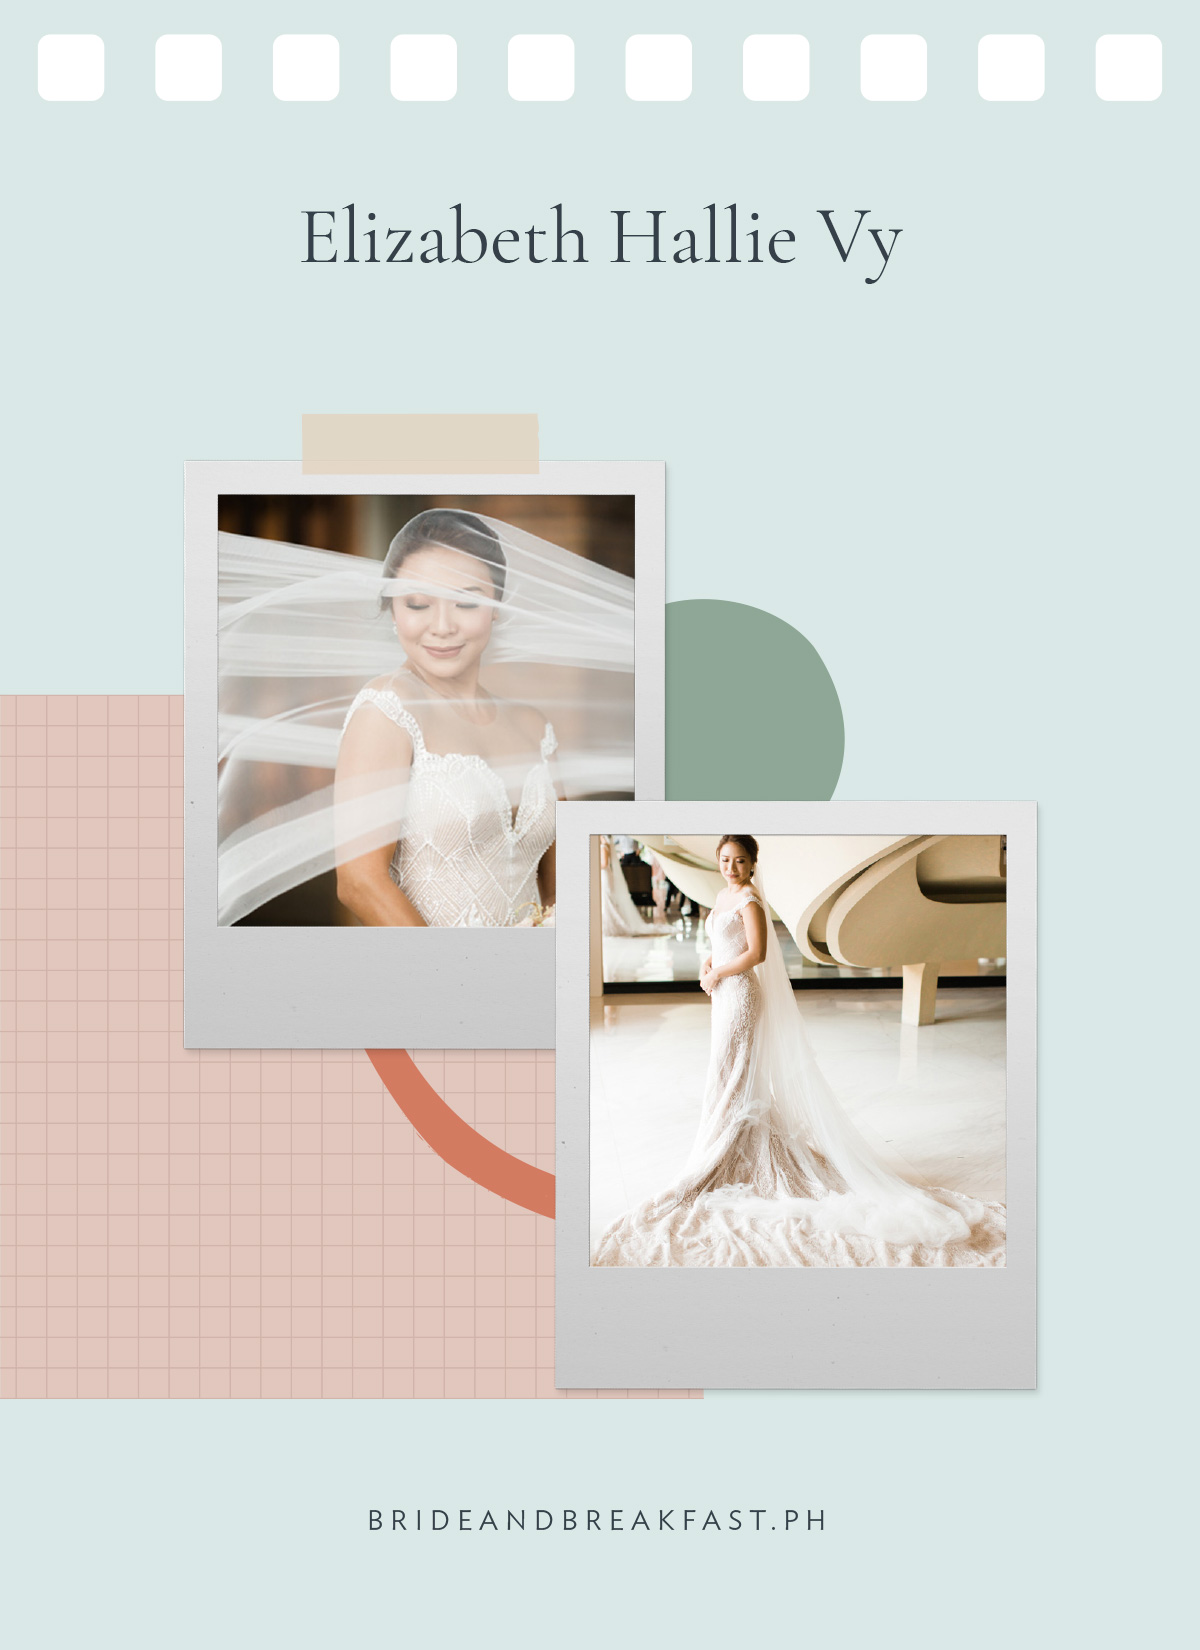 Elizabeth Hallie Vy